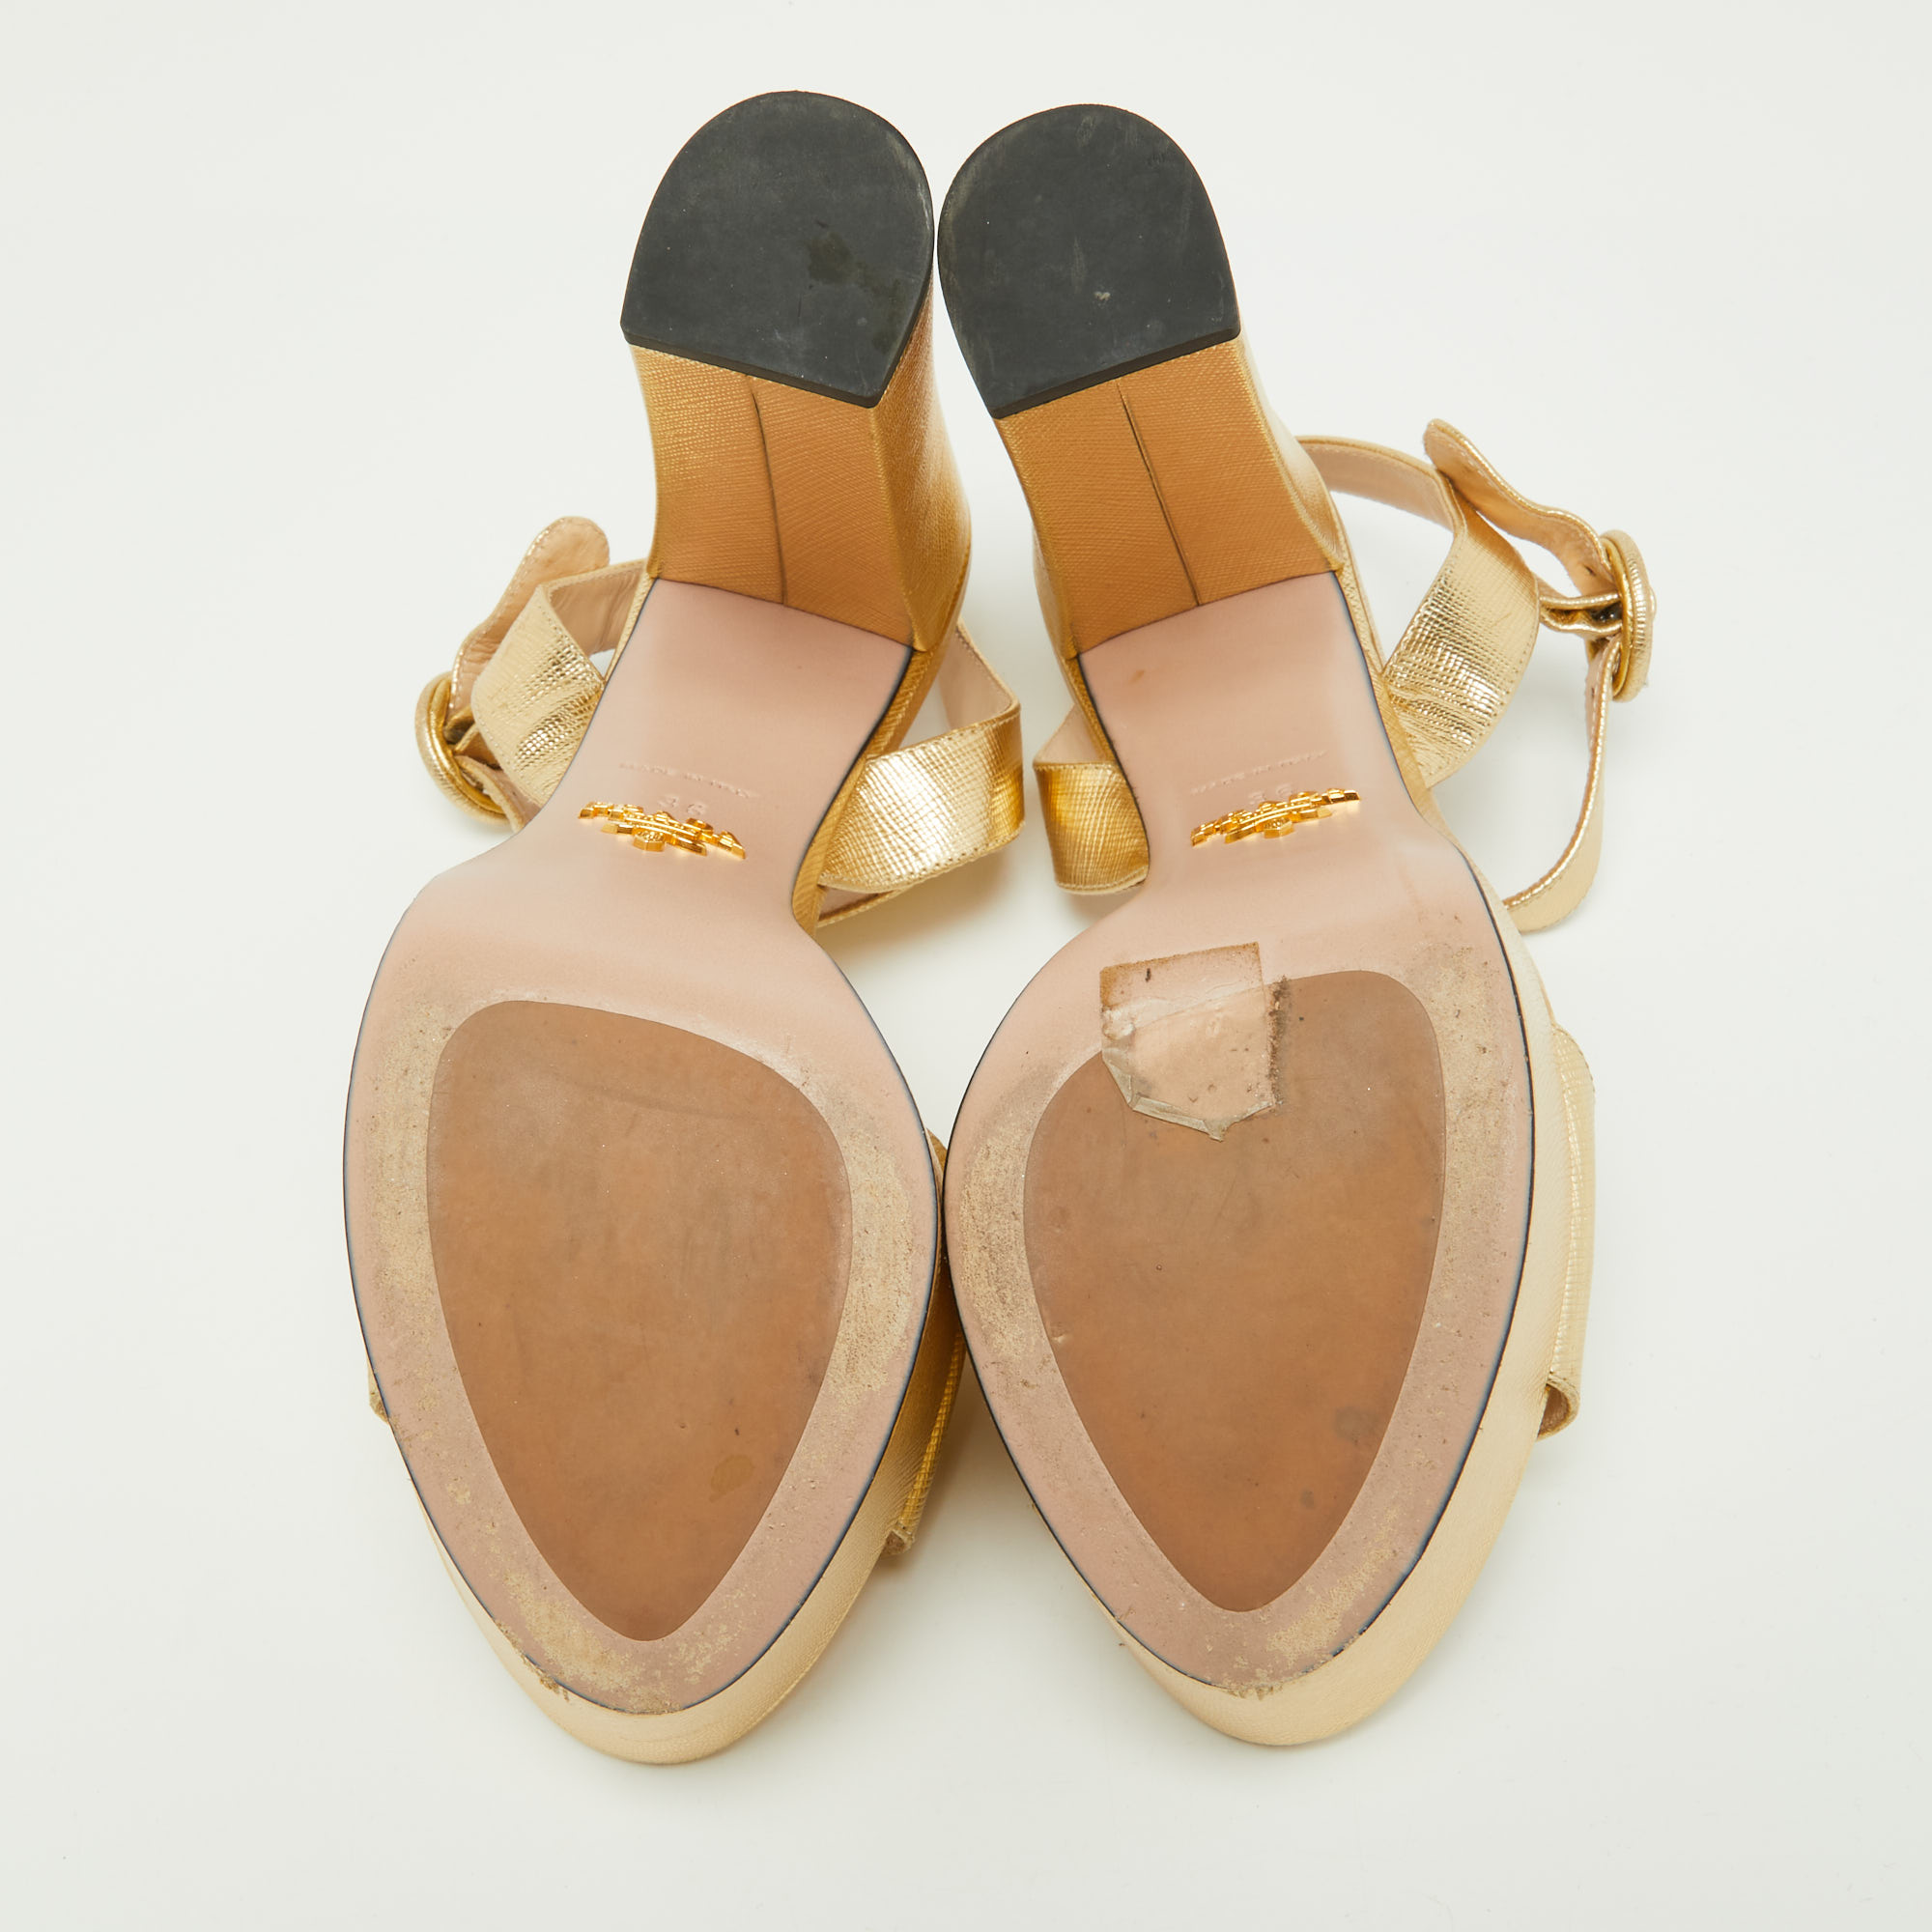 Prada Gold Leather Ankle Strap Block Heel Platform Sandals Size 36